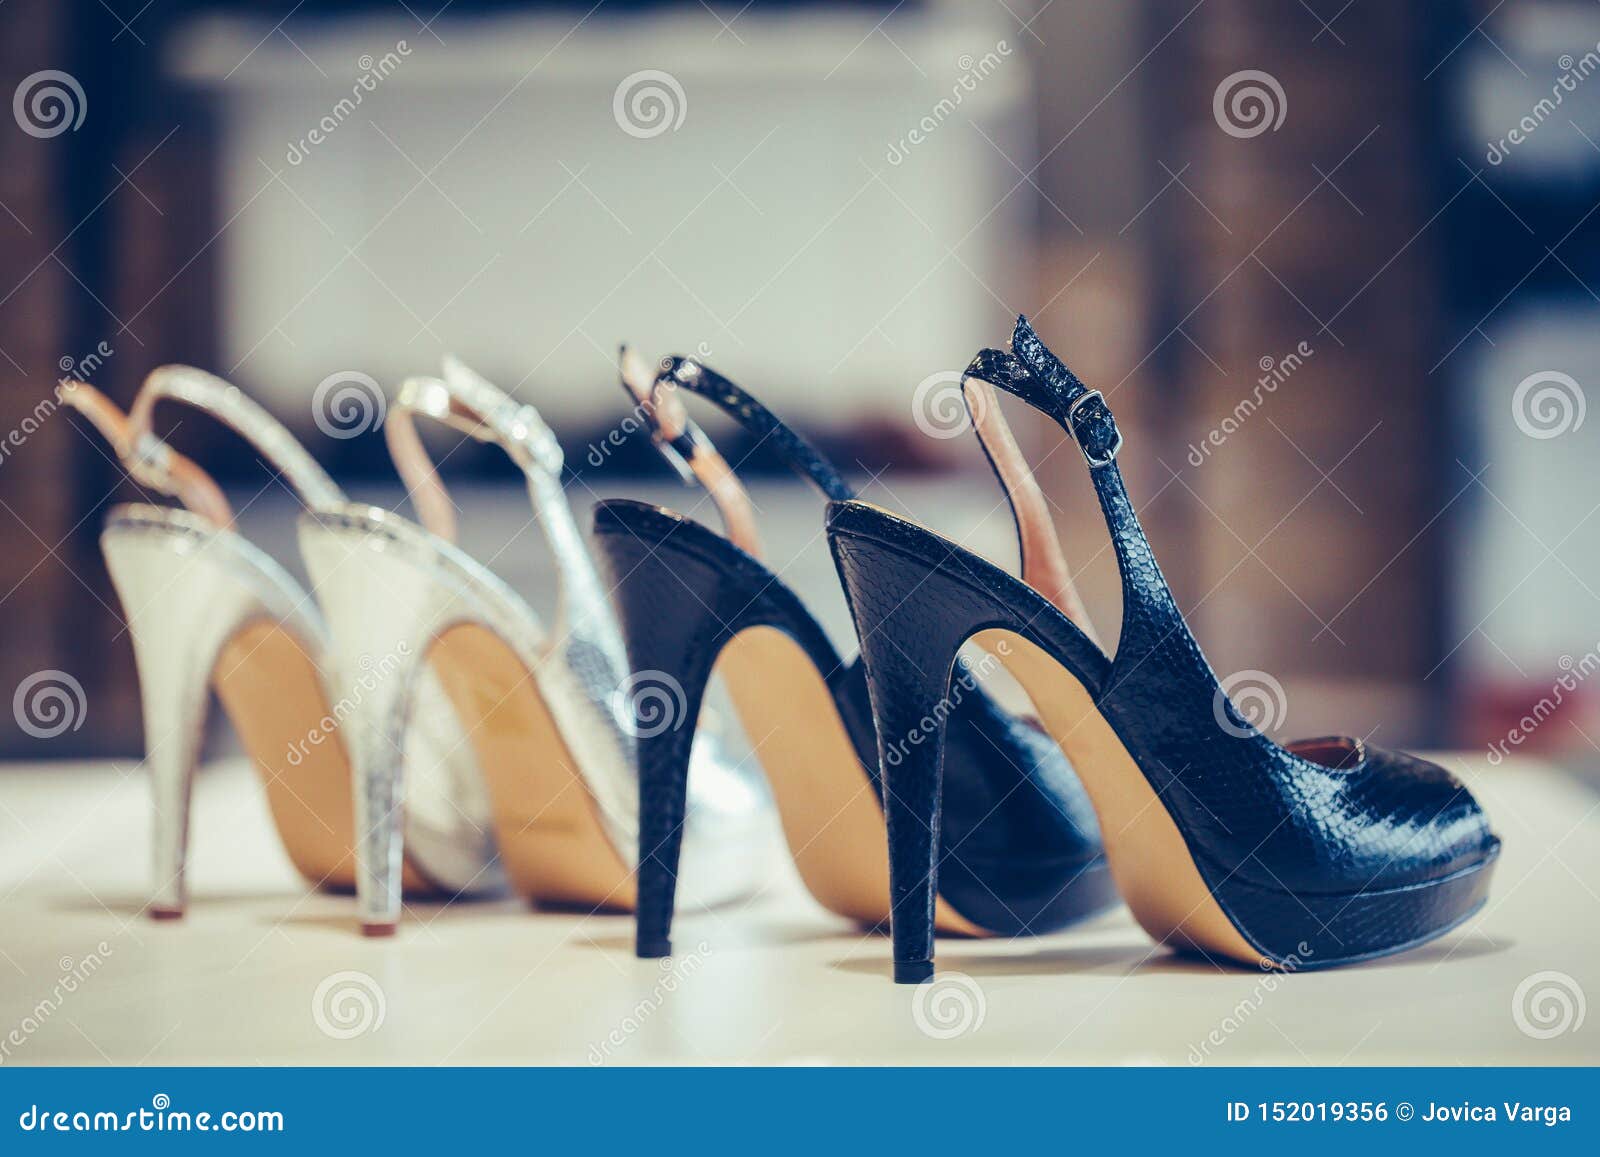 Asd New Collection of Women Unique Design Sandals & Heels